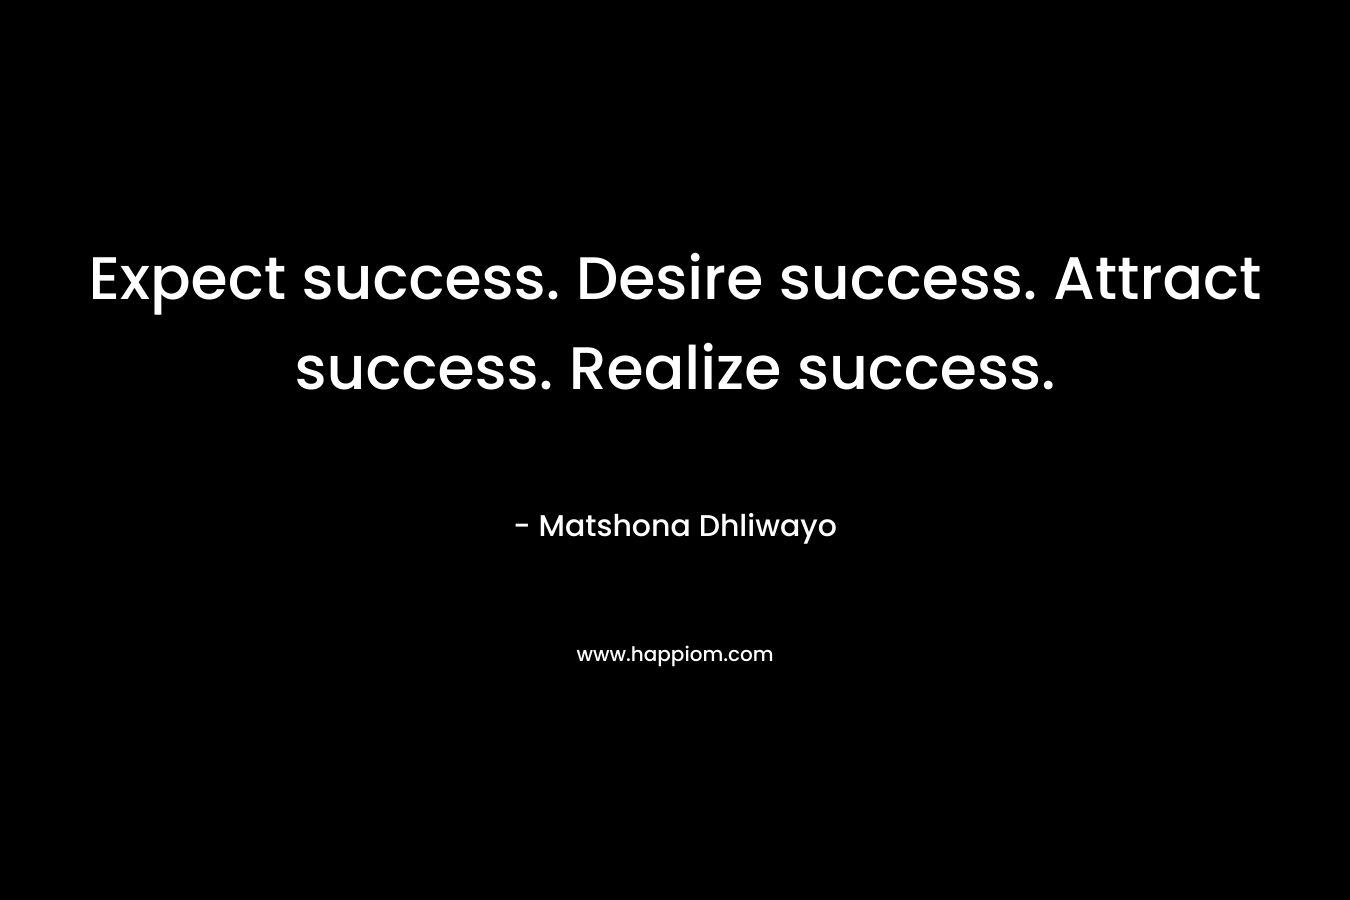 Expect success. Desire success. Attract success. Realize success.